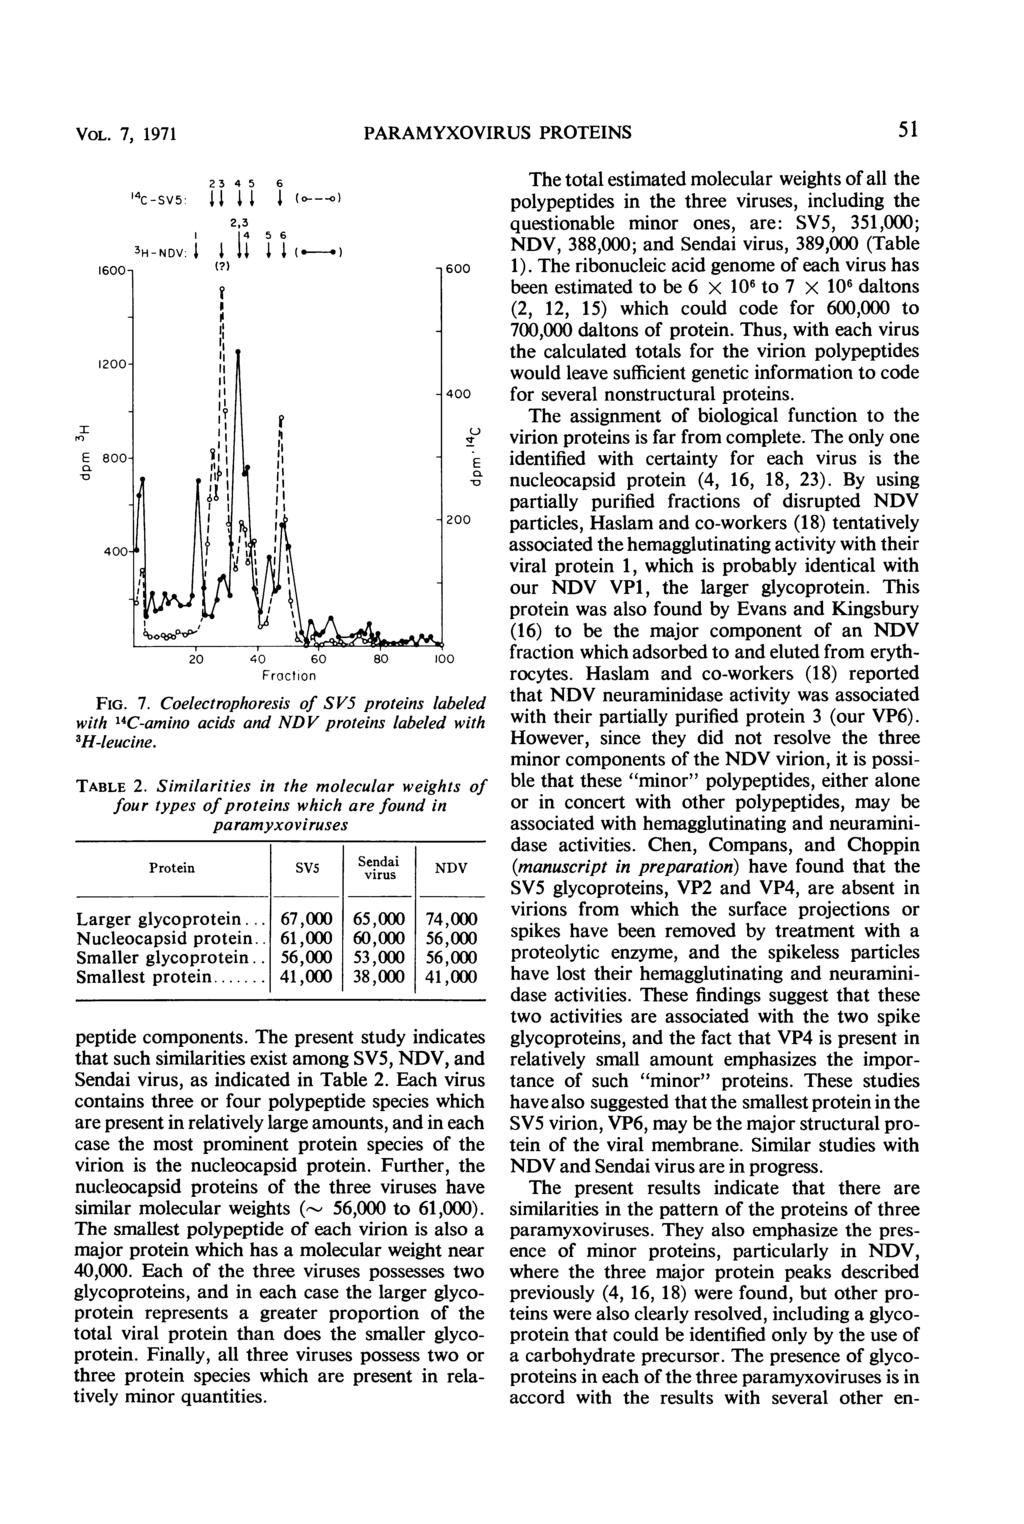 VOL. 7, 1971 PARAMYXOVIRUS PROTINS 51 23 4 5 6 4C-sv5 1 1 1 1 (---) 2,3 I 4 5 6 3H-NDV: 'I I'1 (?) I I ( ) 40 60 FIG. 7. Coelectrophoresis of SV5 proteins labeled with 'IC-amino acids and ND V proteins labeled with 3H-leucine.